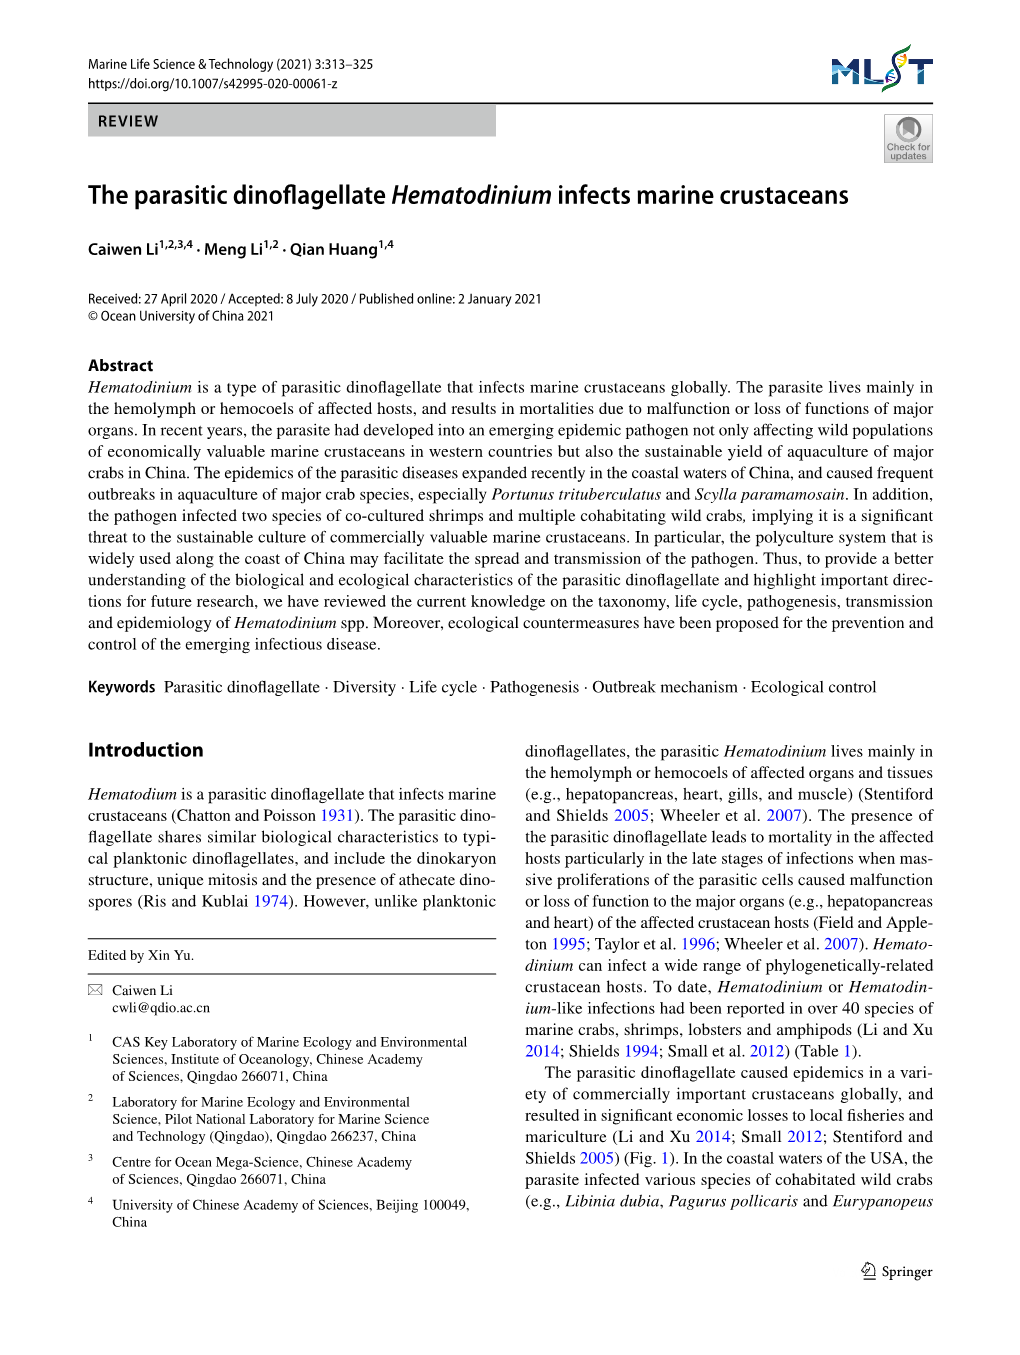 The Parasitic Dinoflagellate Hematodinium Infects Marine Crustaceans